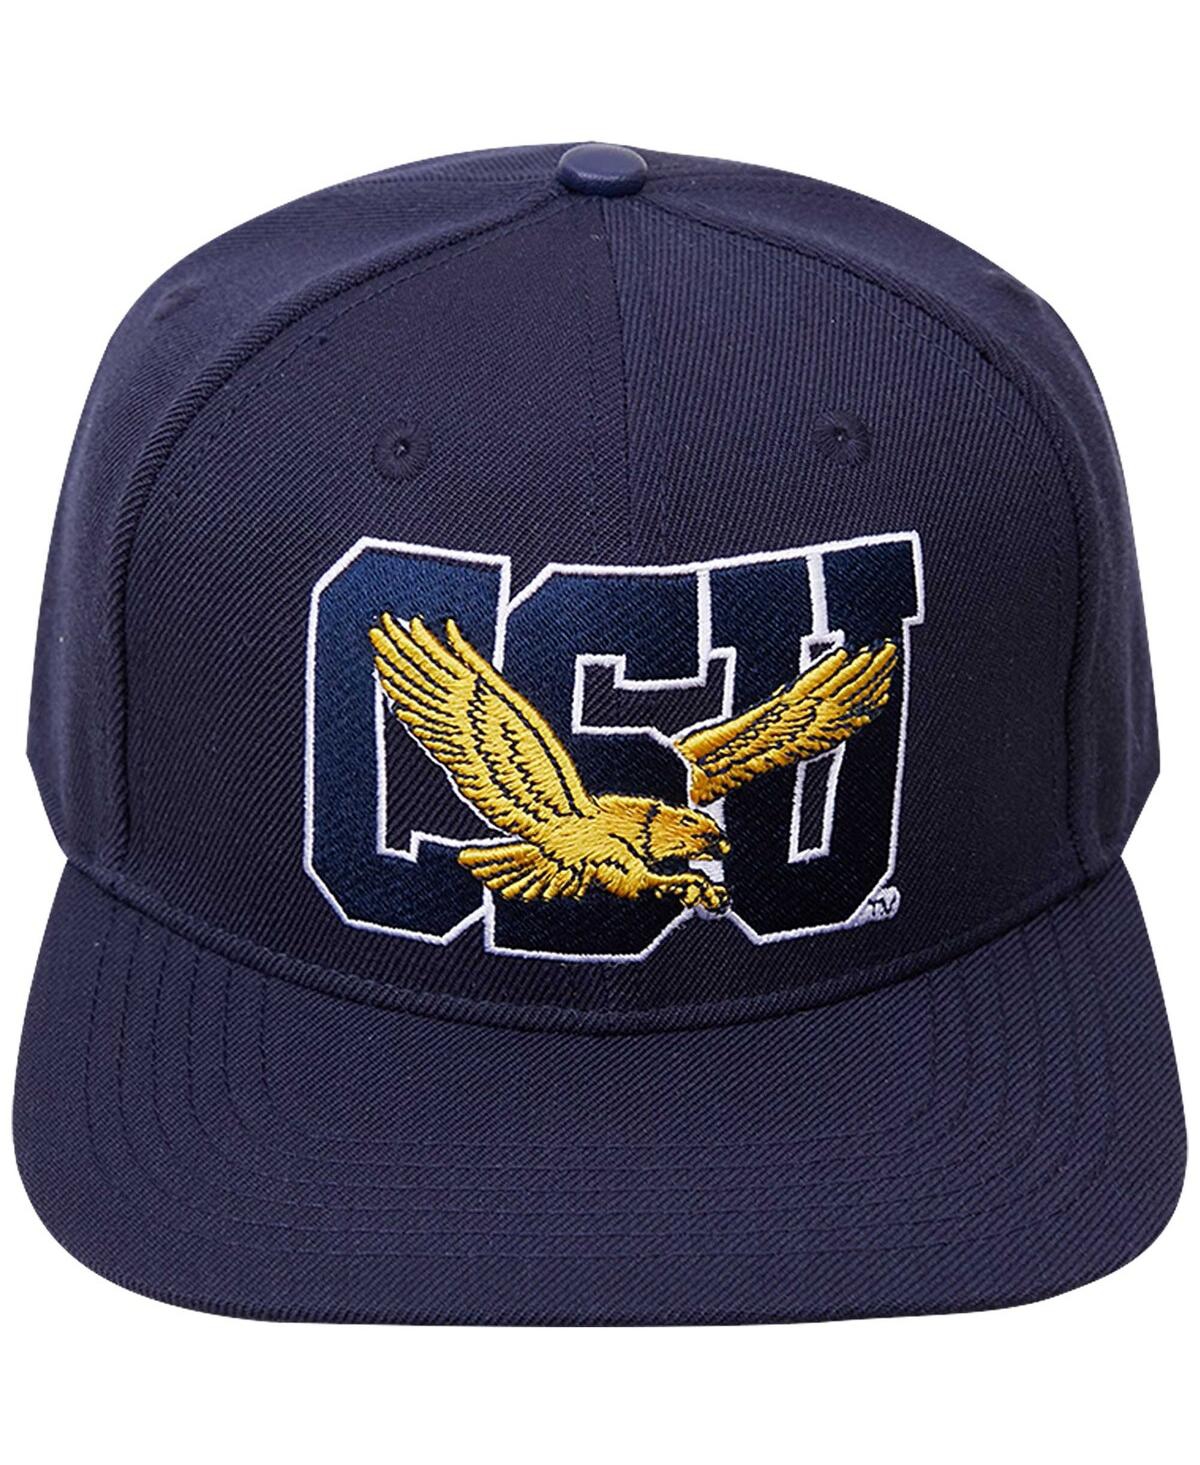 Shop Pro Standard Men's  Navy Coppin State Eagles Evergreen Csu Snapback Hat